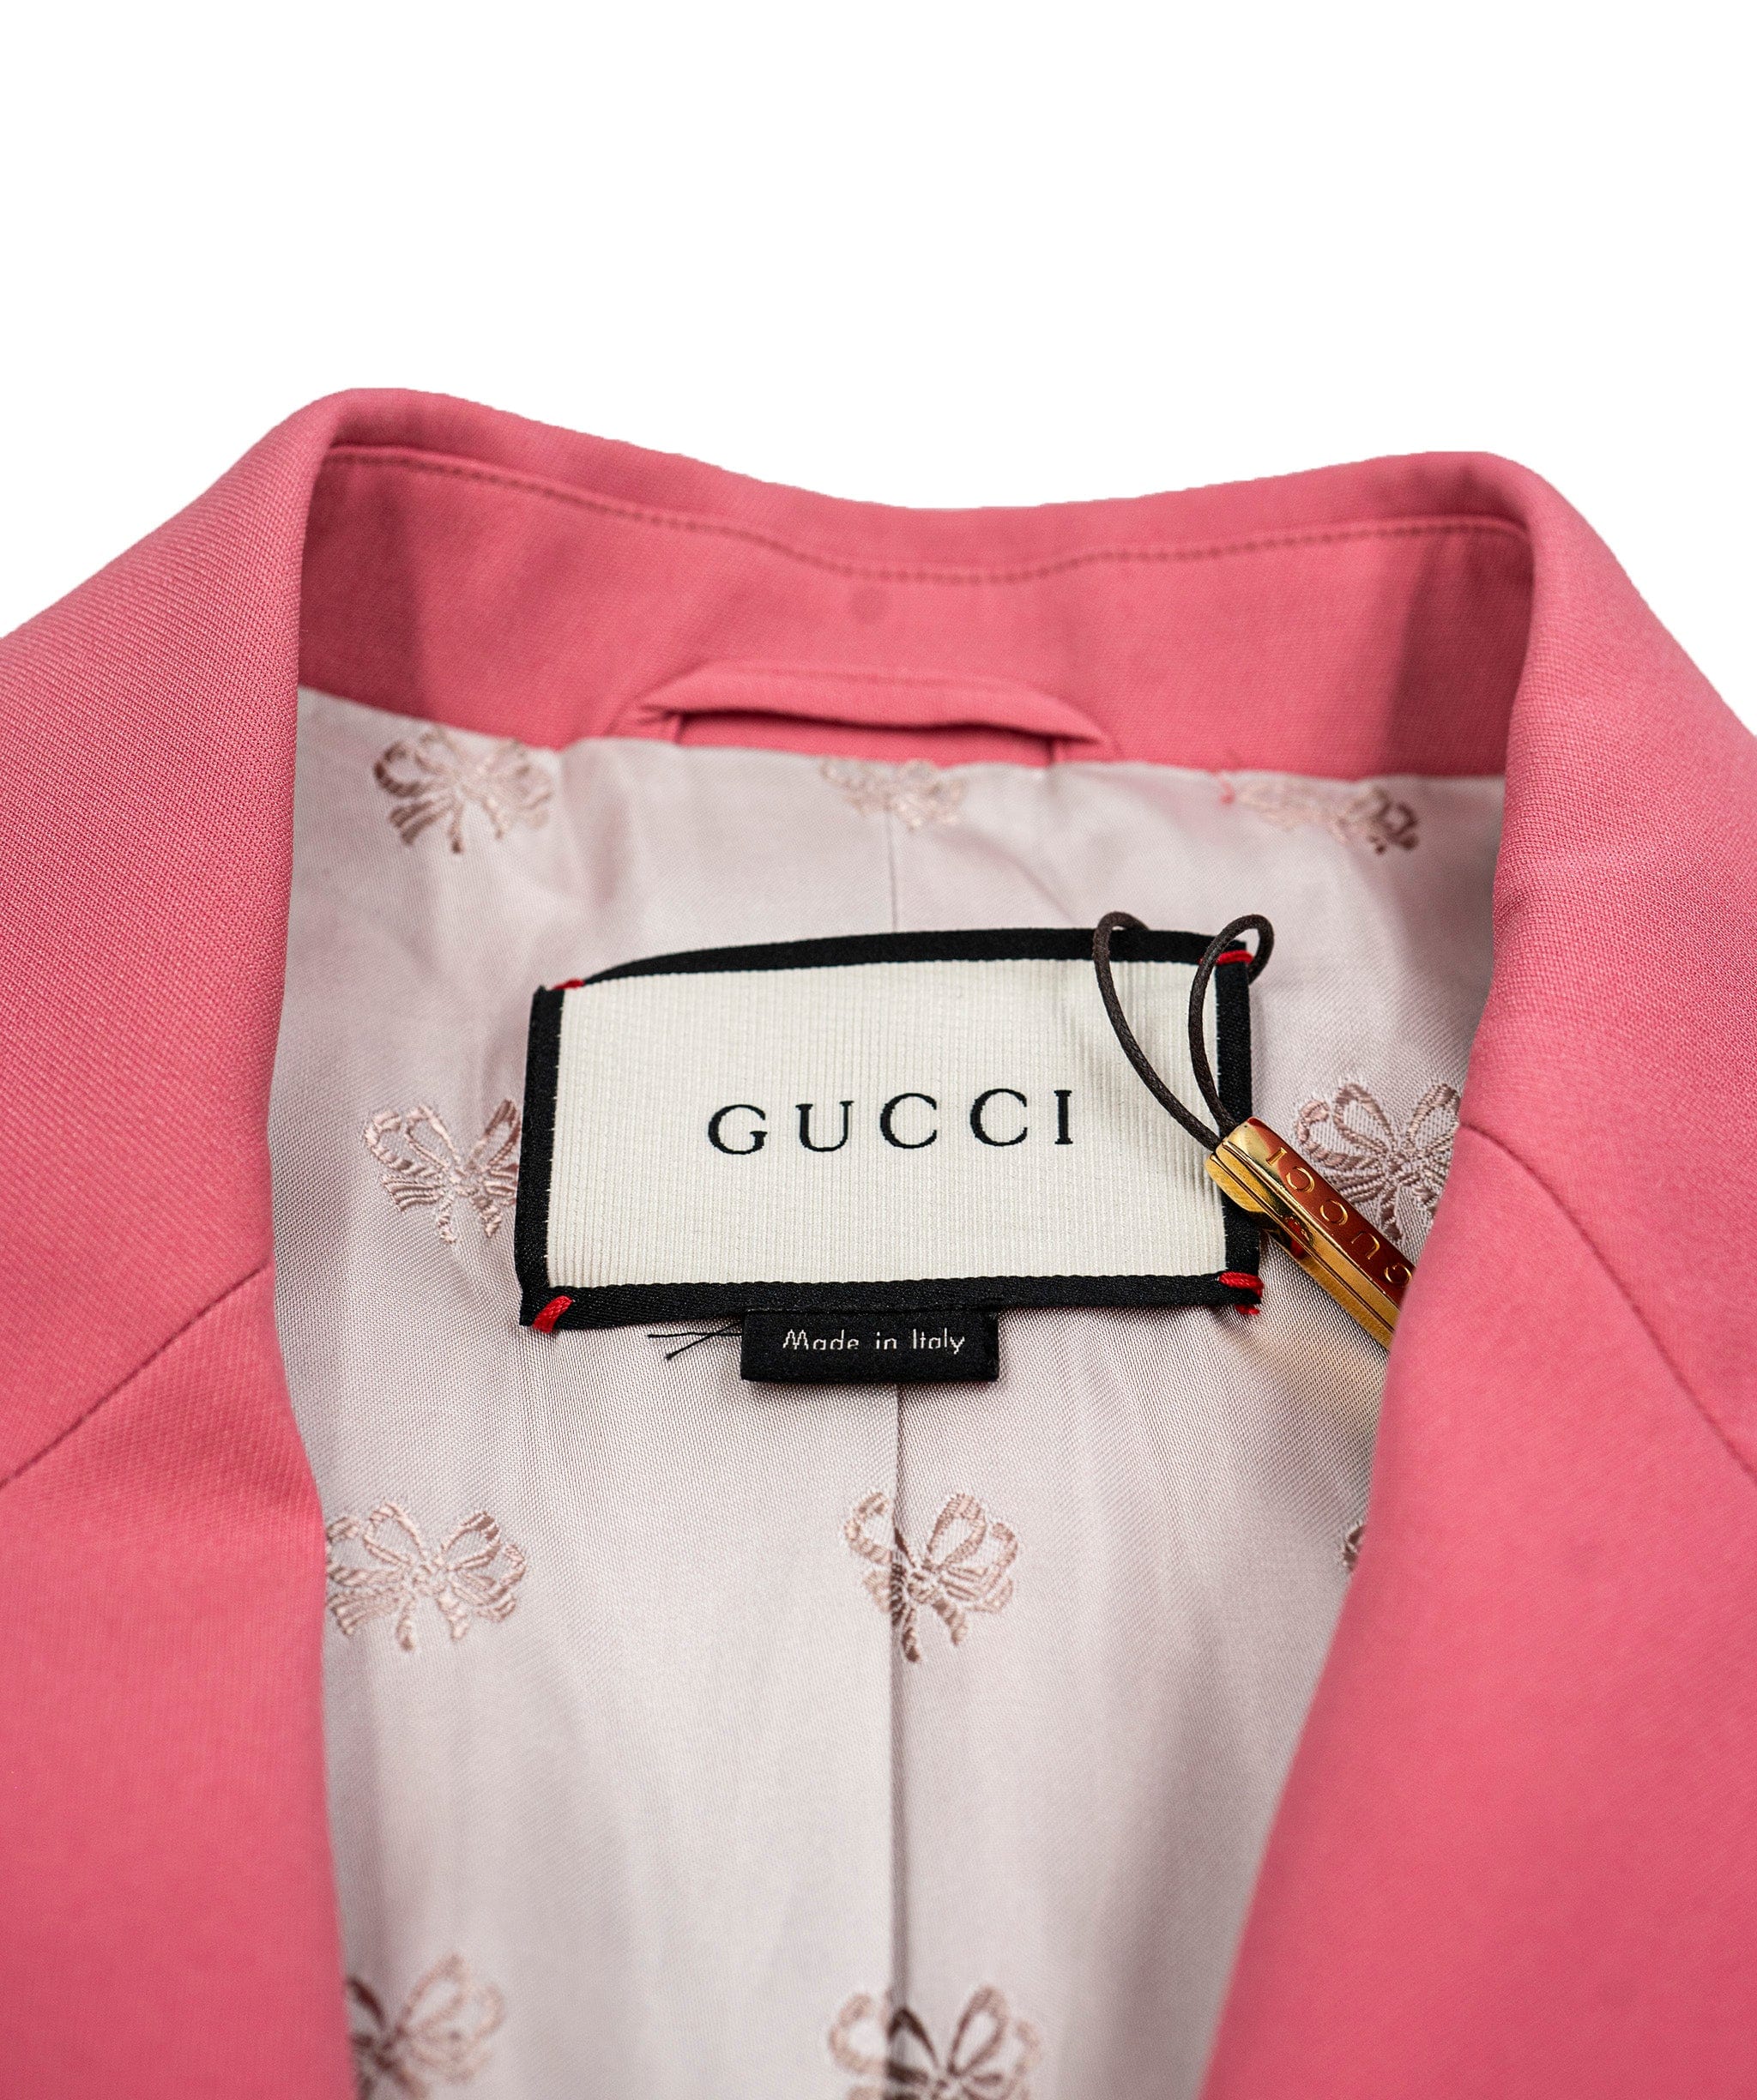 Gucci Gucci Tailored Blazer, Wool/ Silk, Pink, UK 12 ASL5060